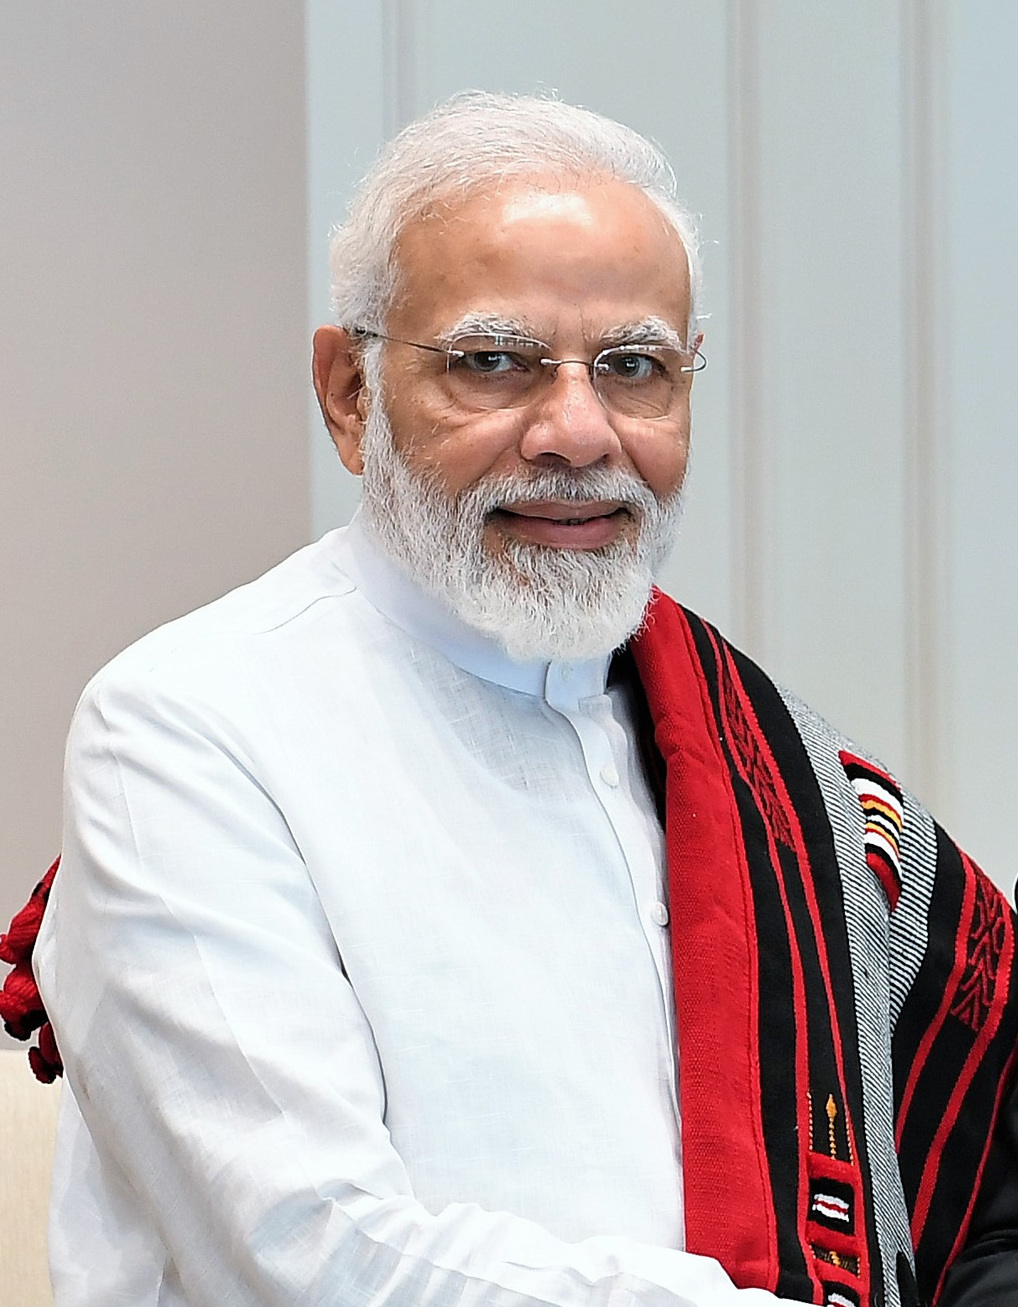 PM Modi’s Actions “Inexcusable” – Lancet Said